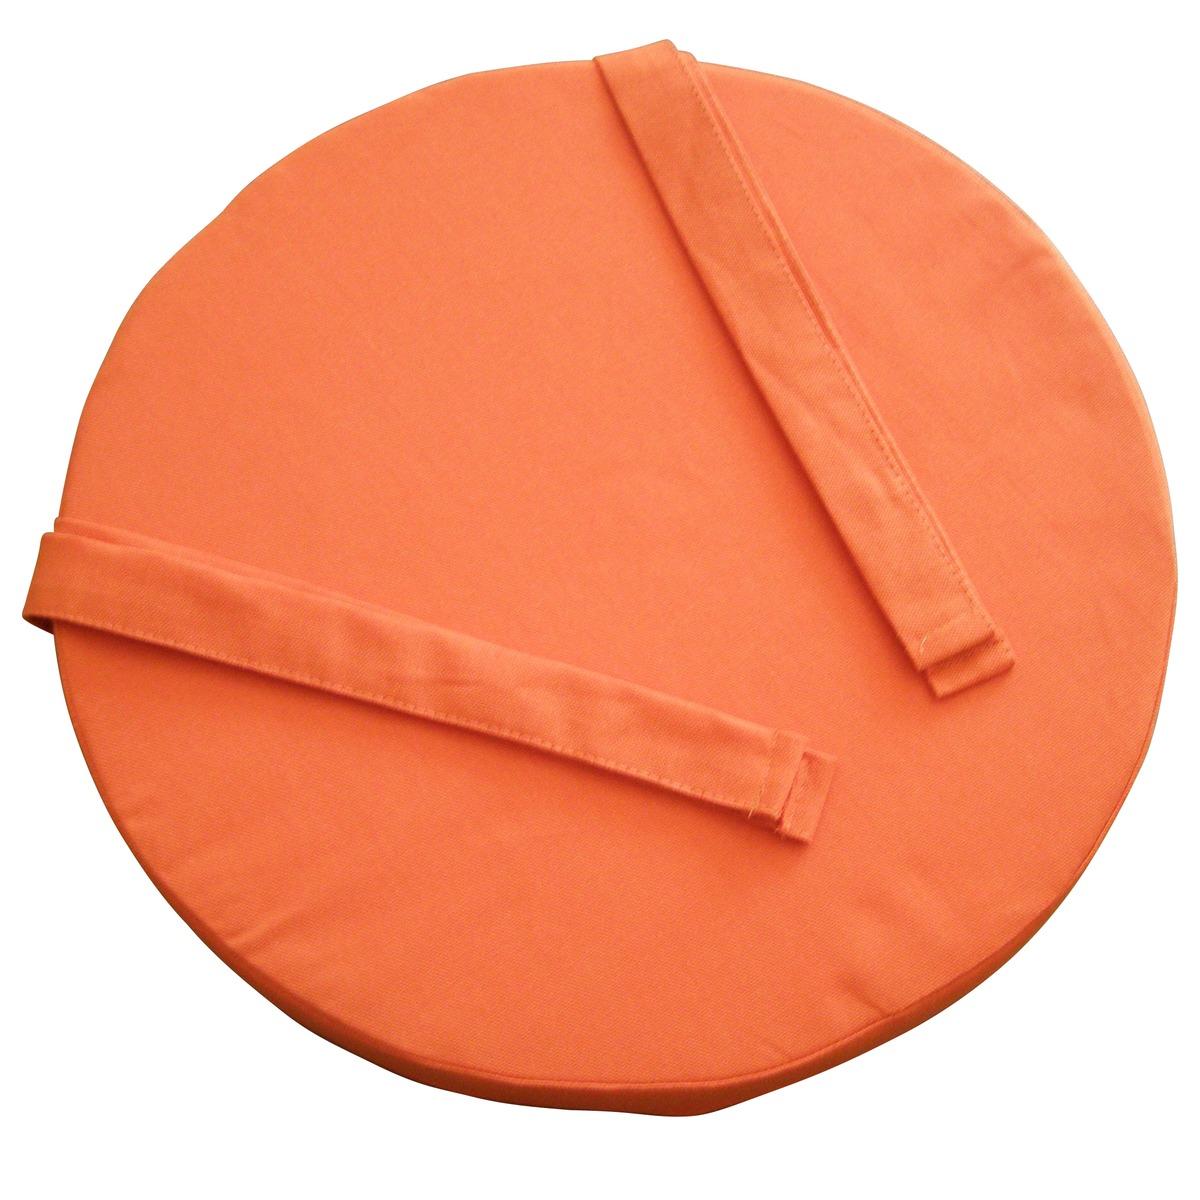 Galette de chaise collection Panama 100 % coton - Diam. 40 x 5 cm - Orange mandarine